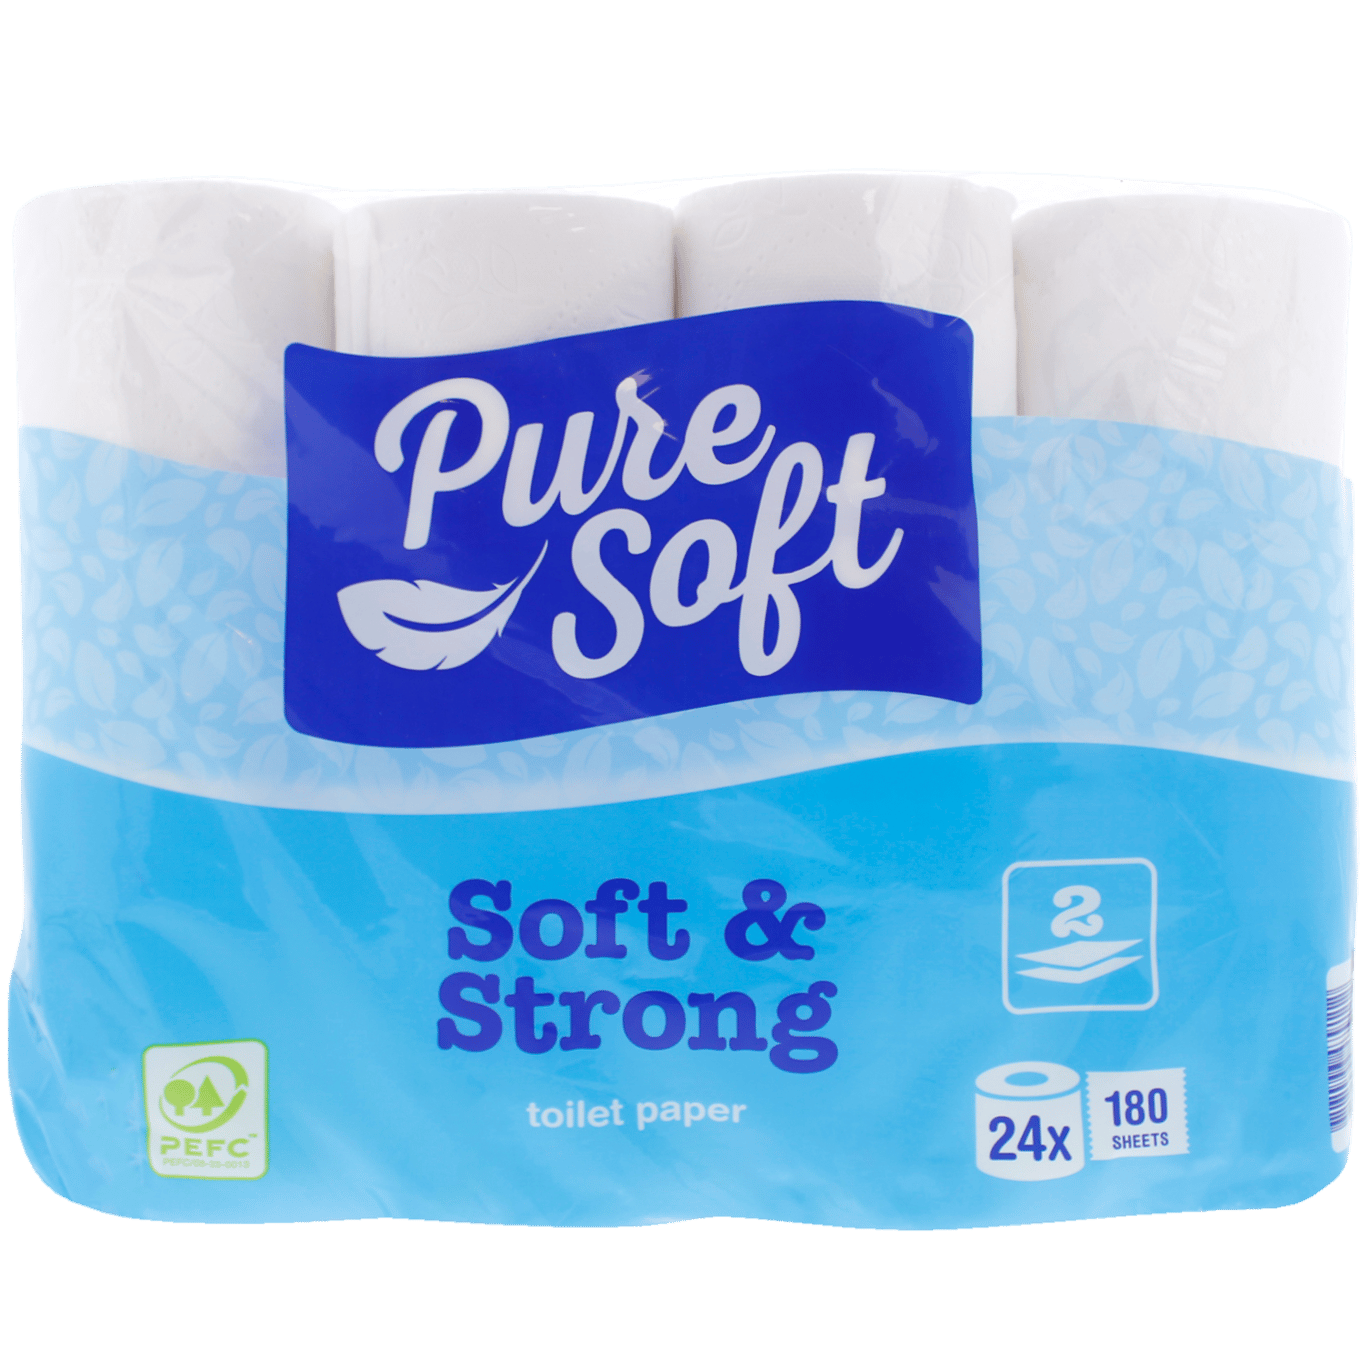 Verloren lijn Shipley Pure Soft toiletpapier Soft & Strong | Action.com